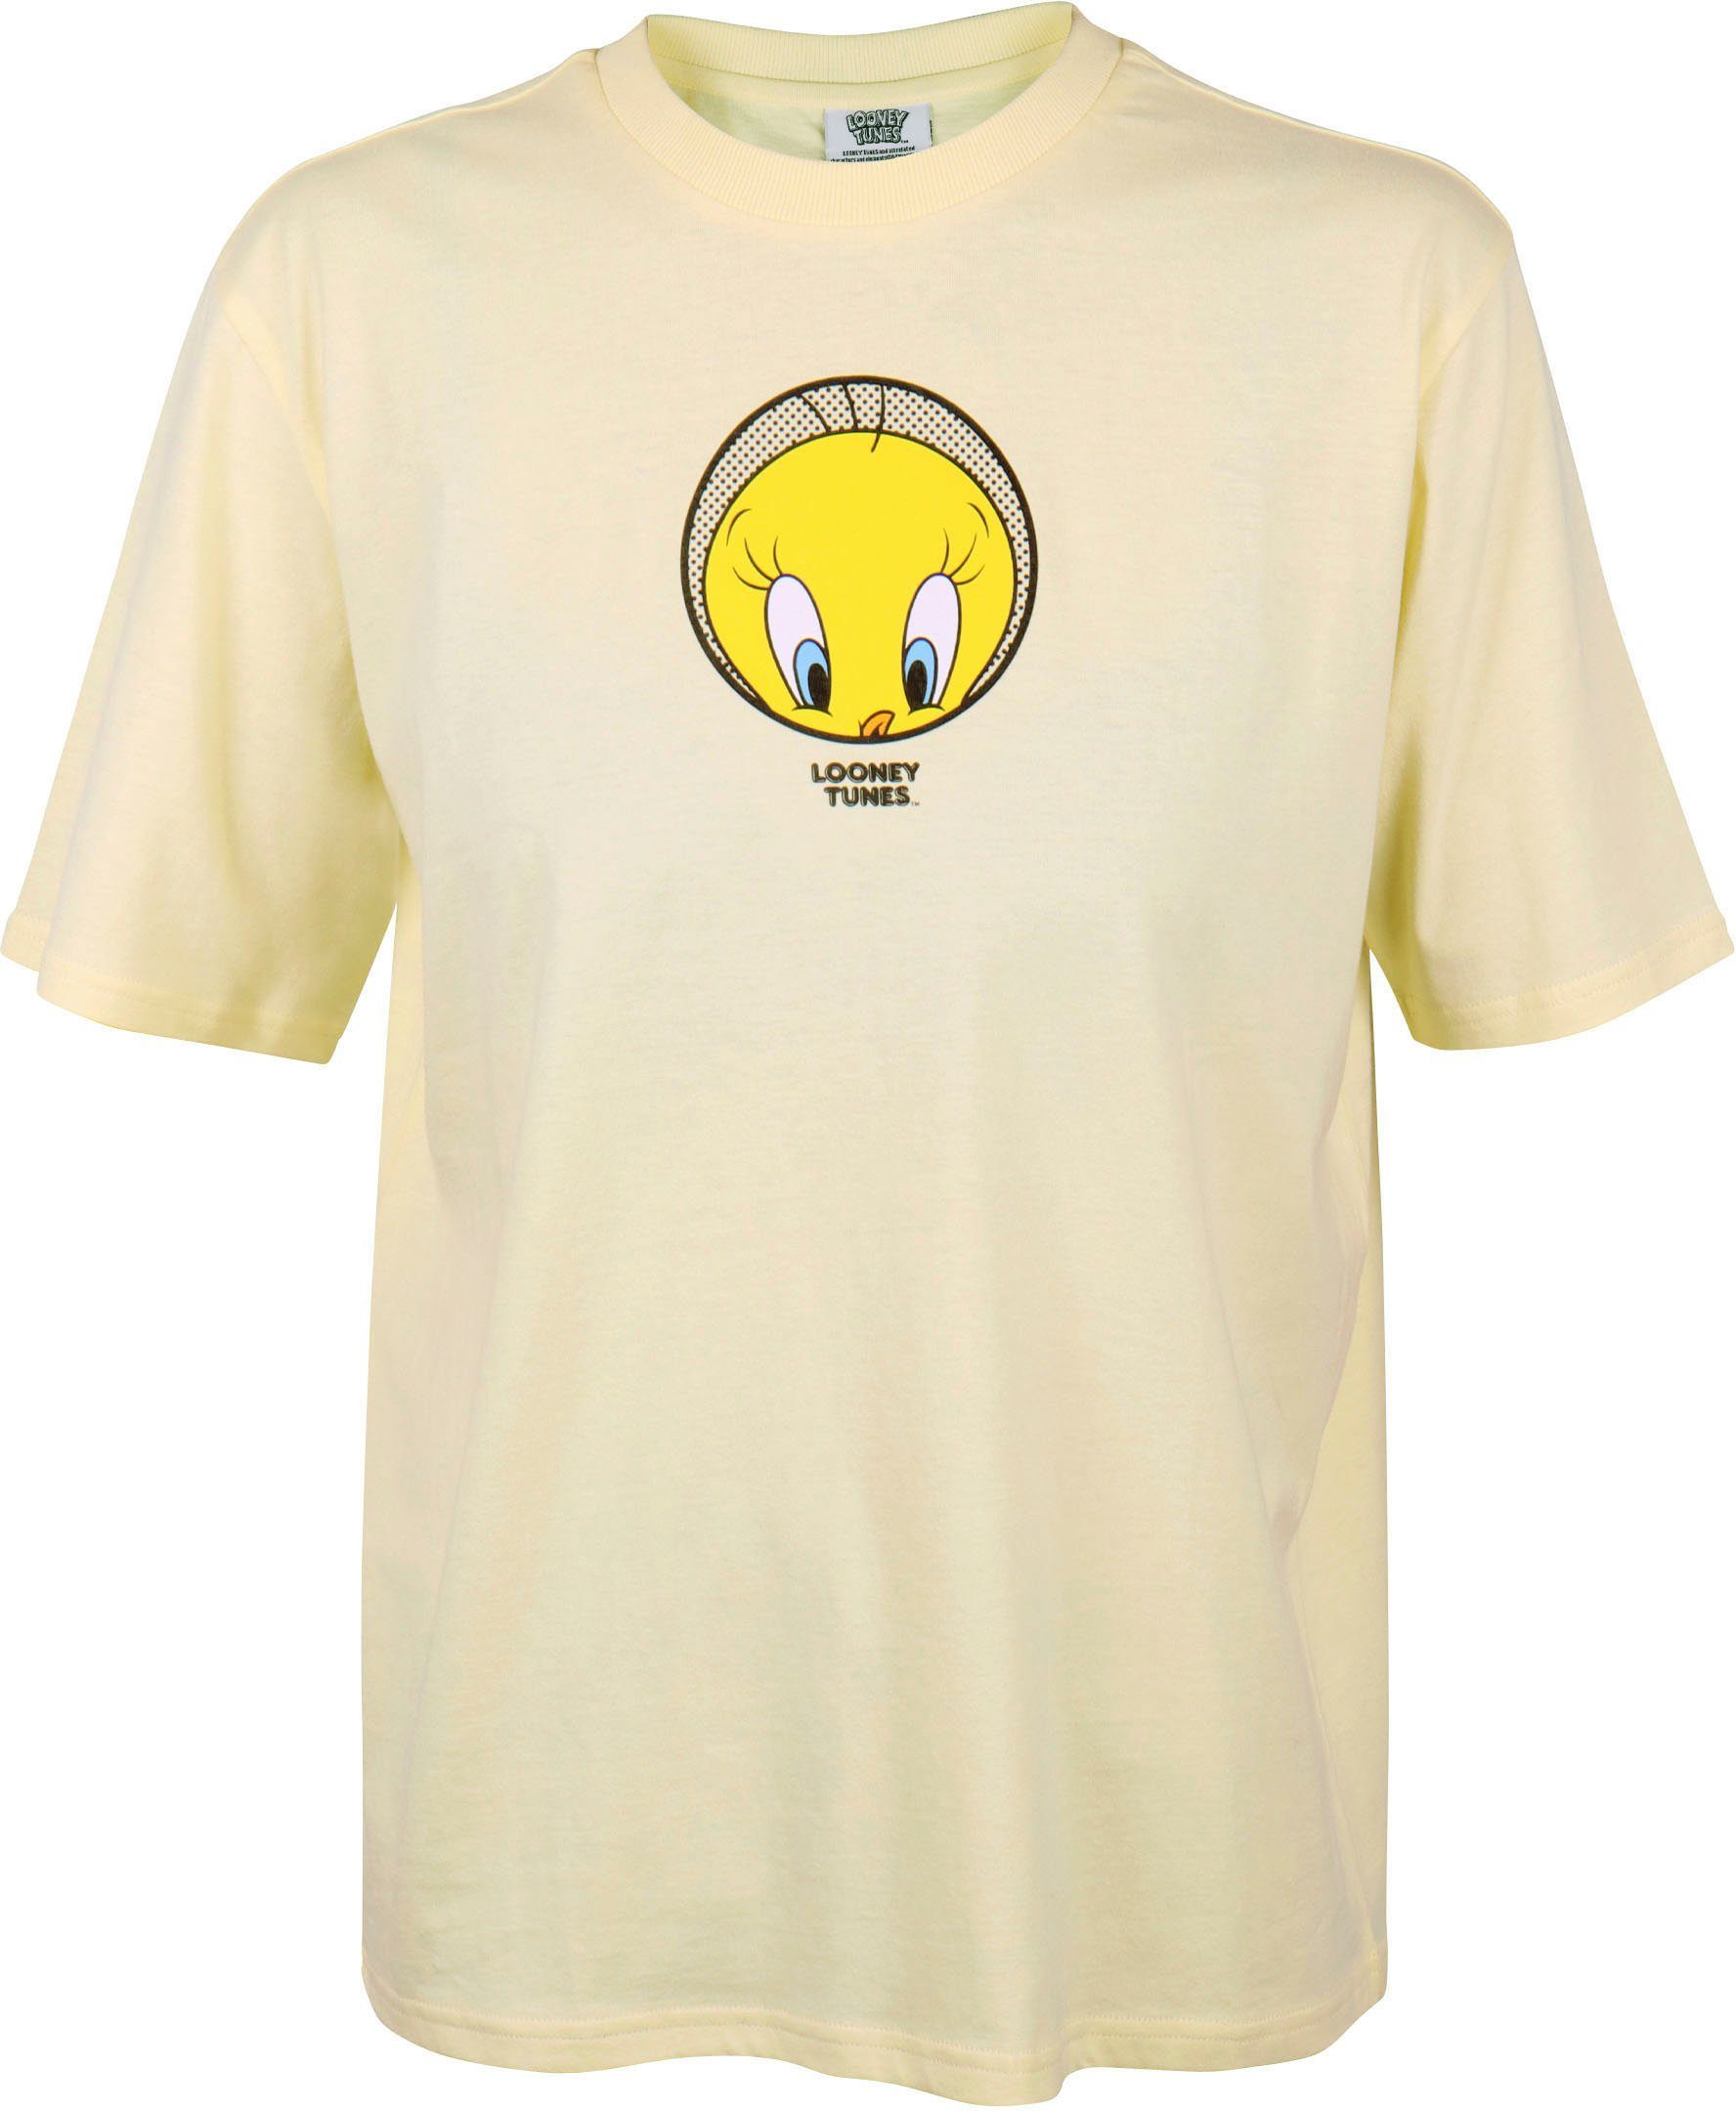 Capelli Vanilla York T-Shirt New T-Shirt Tweety